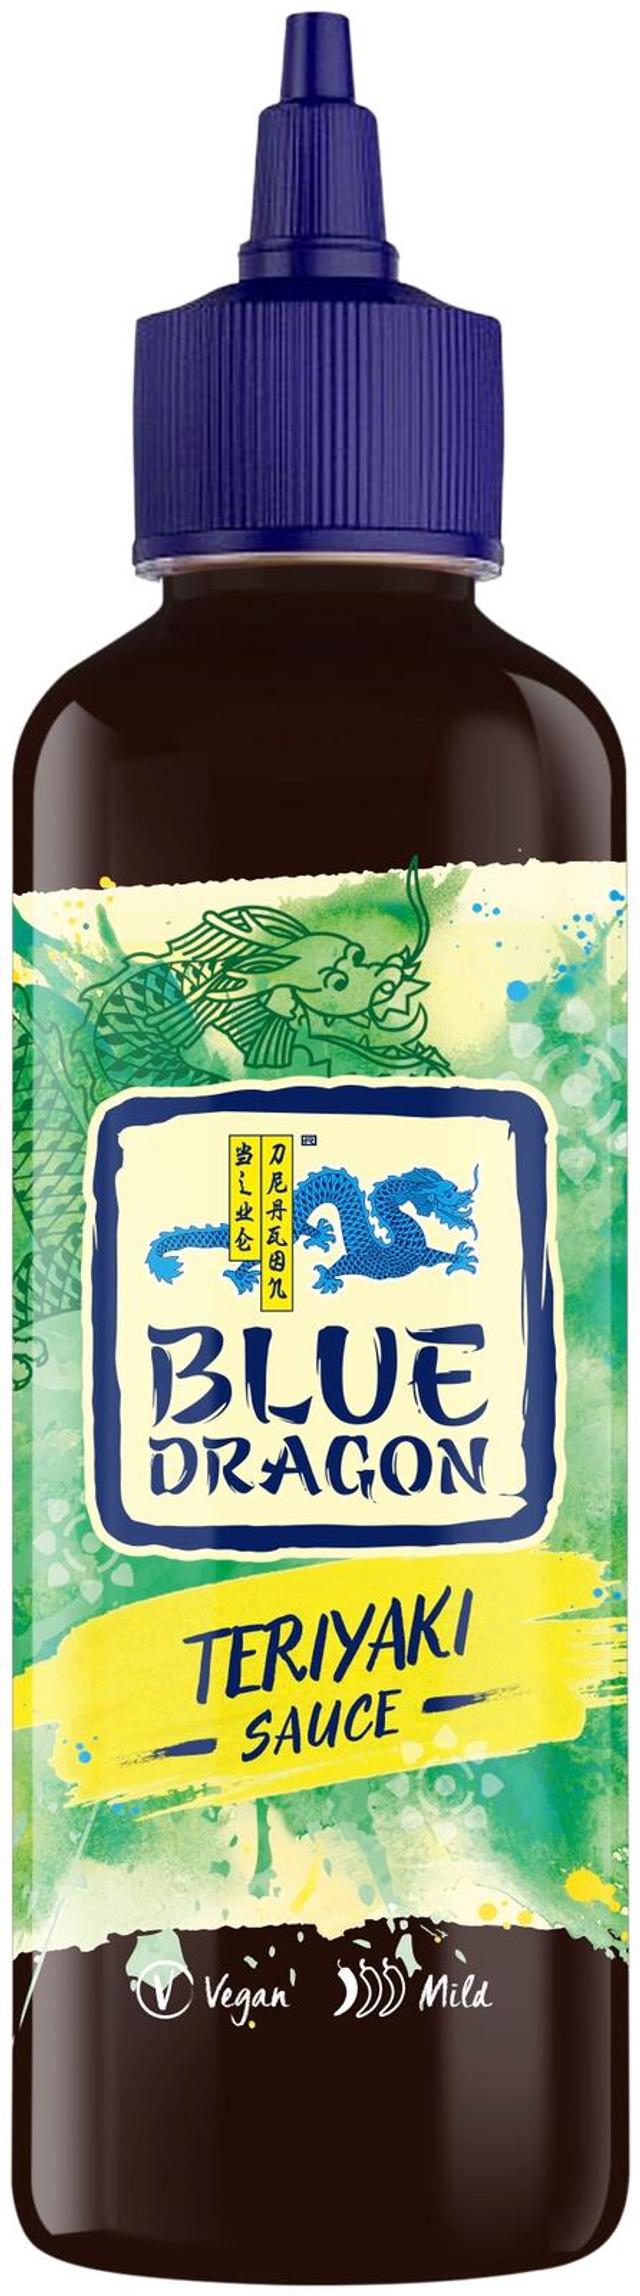 Blue Dragon Teriyaki kastike 250ml